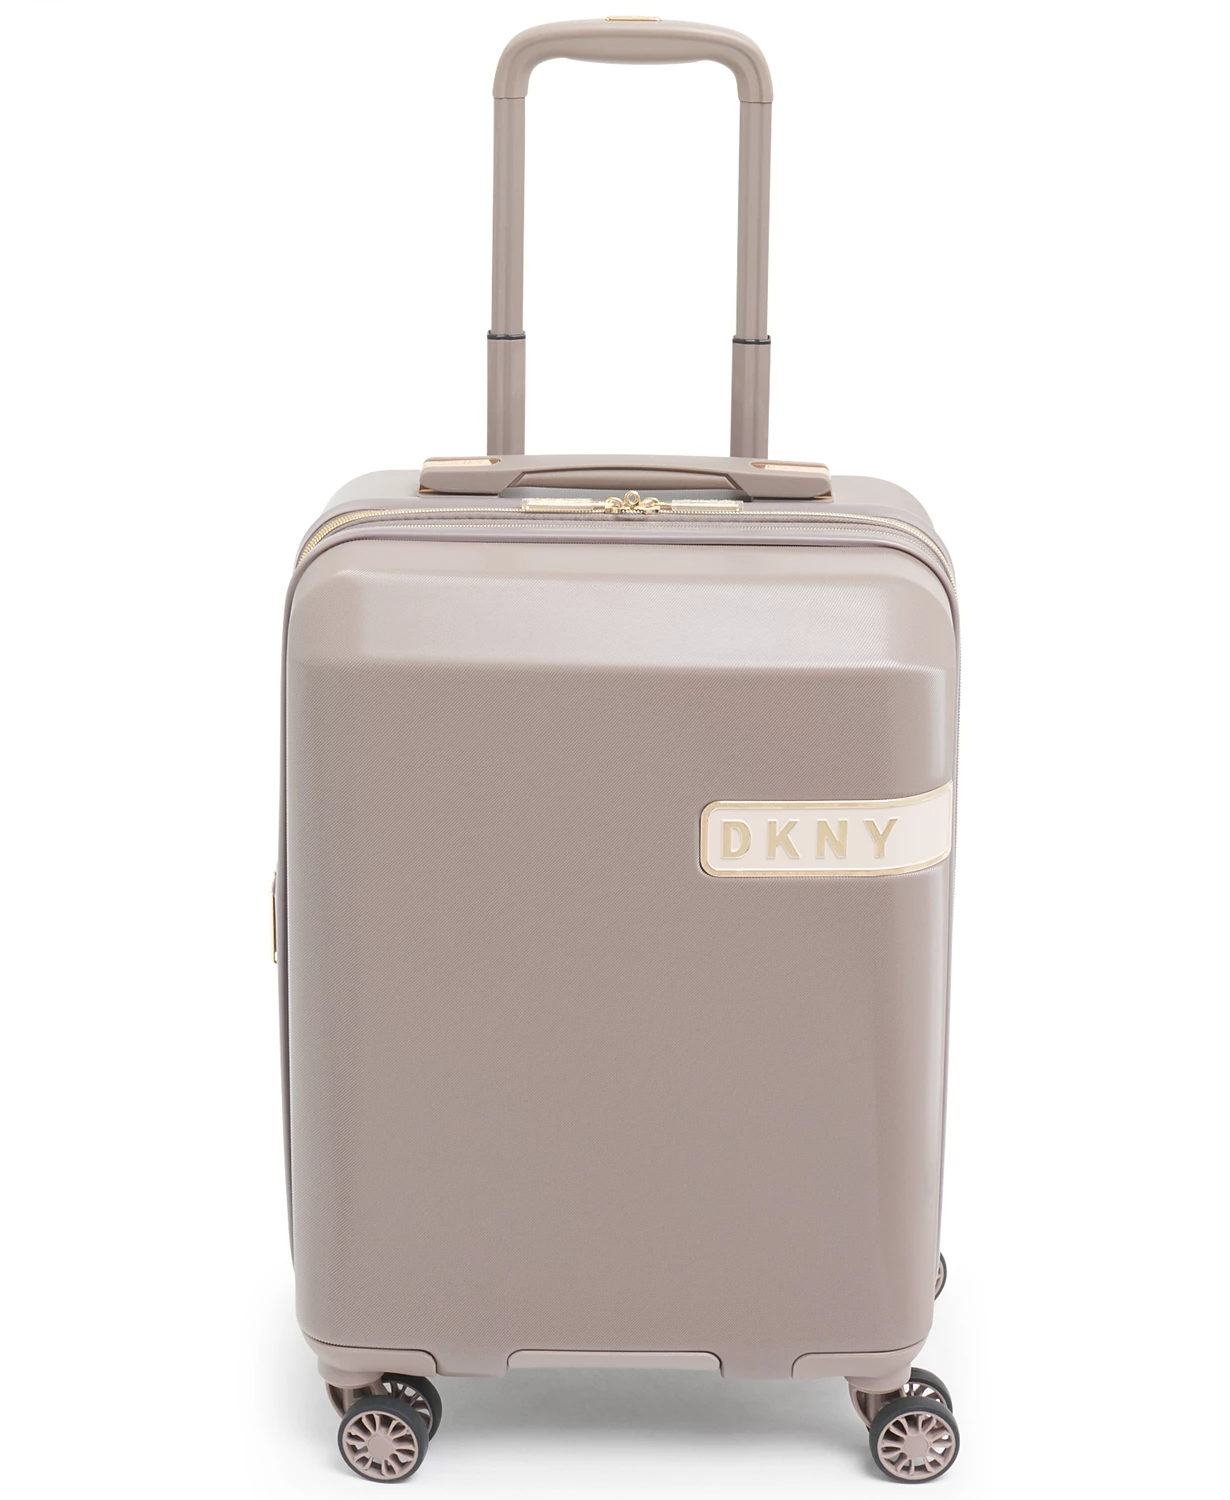 Dkny Rapture Ash 21 Hardside Carry-on Spinner Suitcase